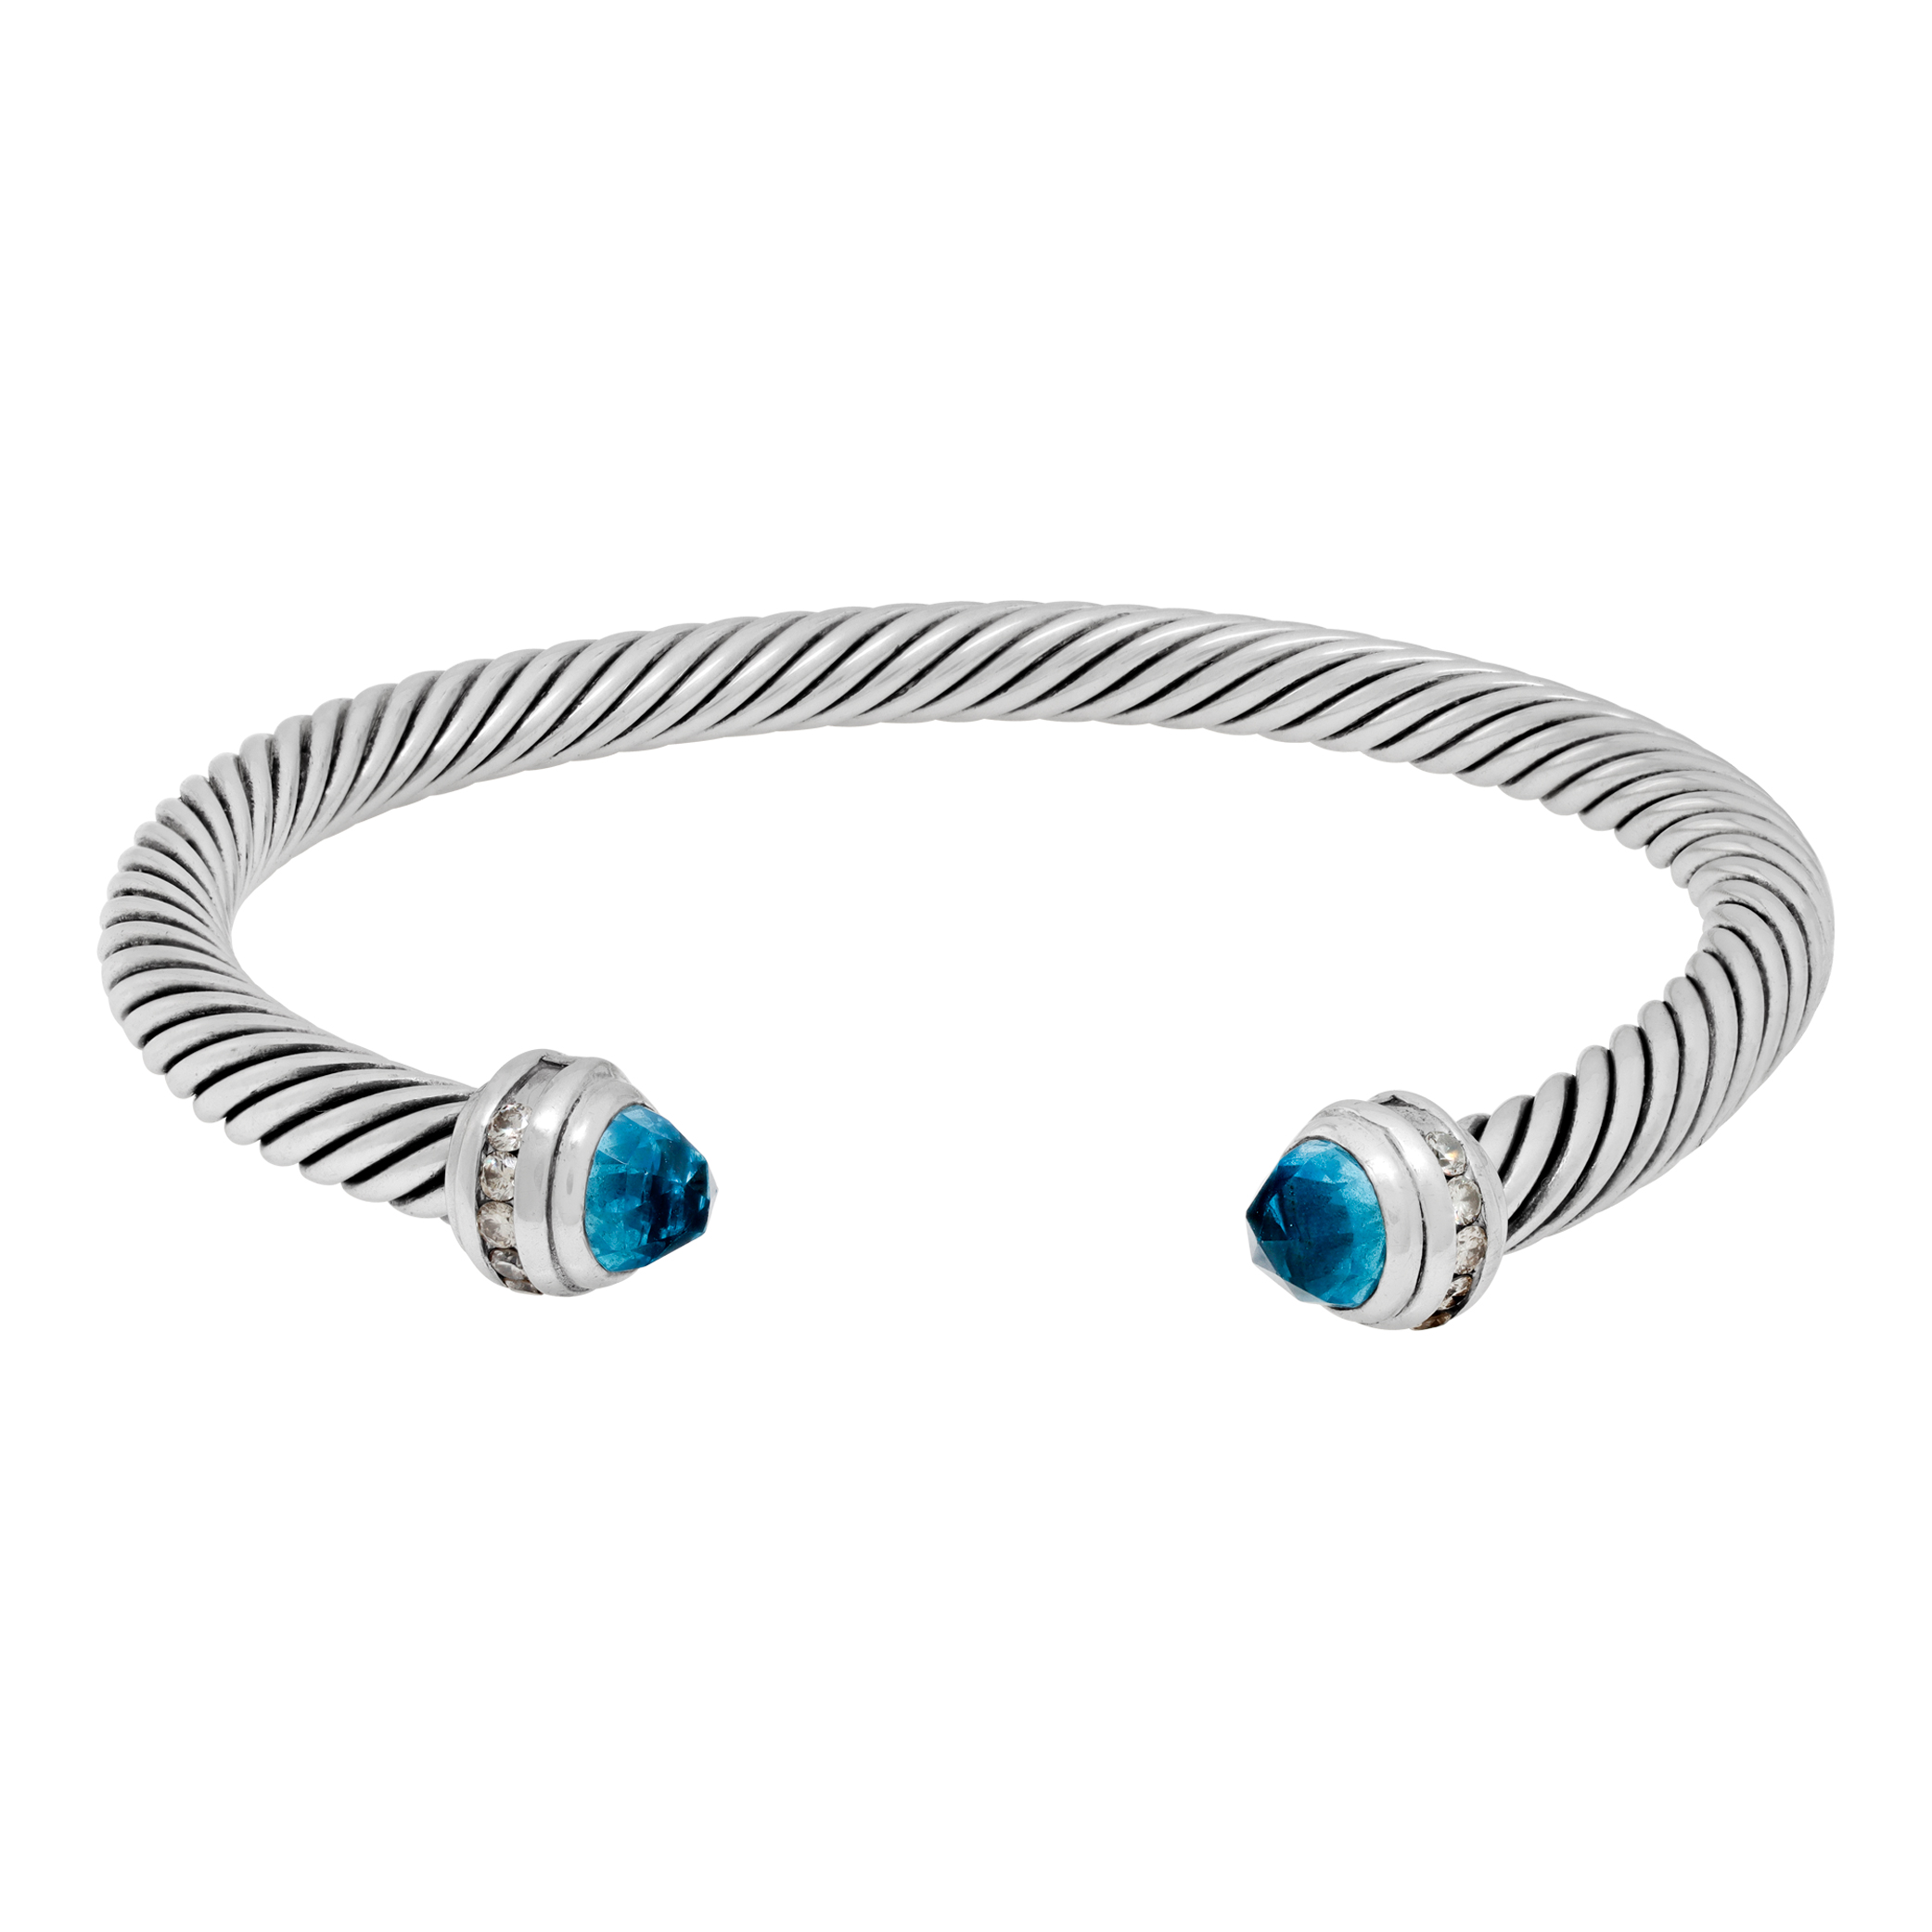 David Yurman cable bracelets in sterling silver with topaz & diamonds